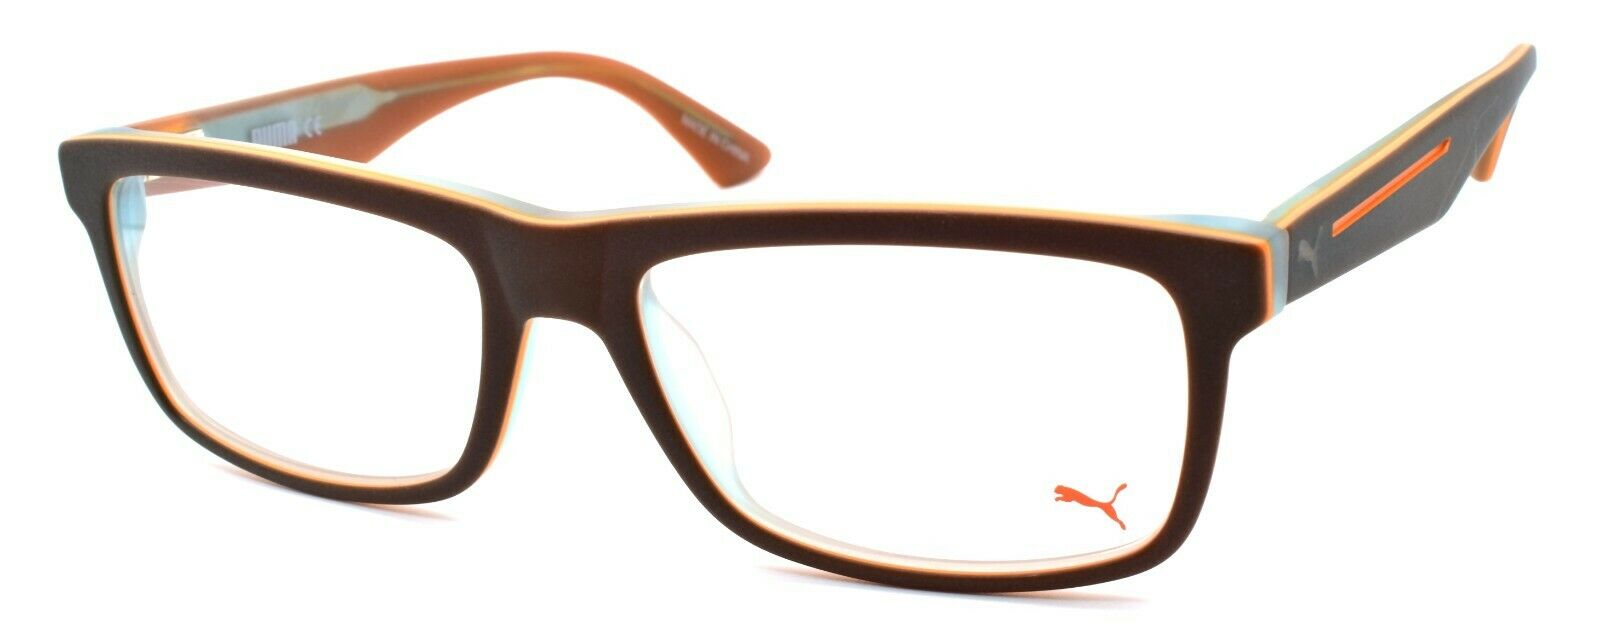 1-PUMA PU0053O 005 Men's Eyeglasses Frames 53-17-145 Green - Brown-889652016221-IKSpecs